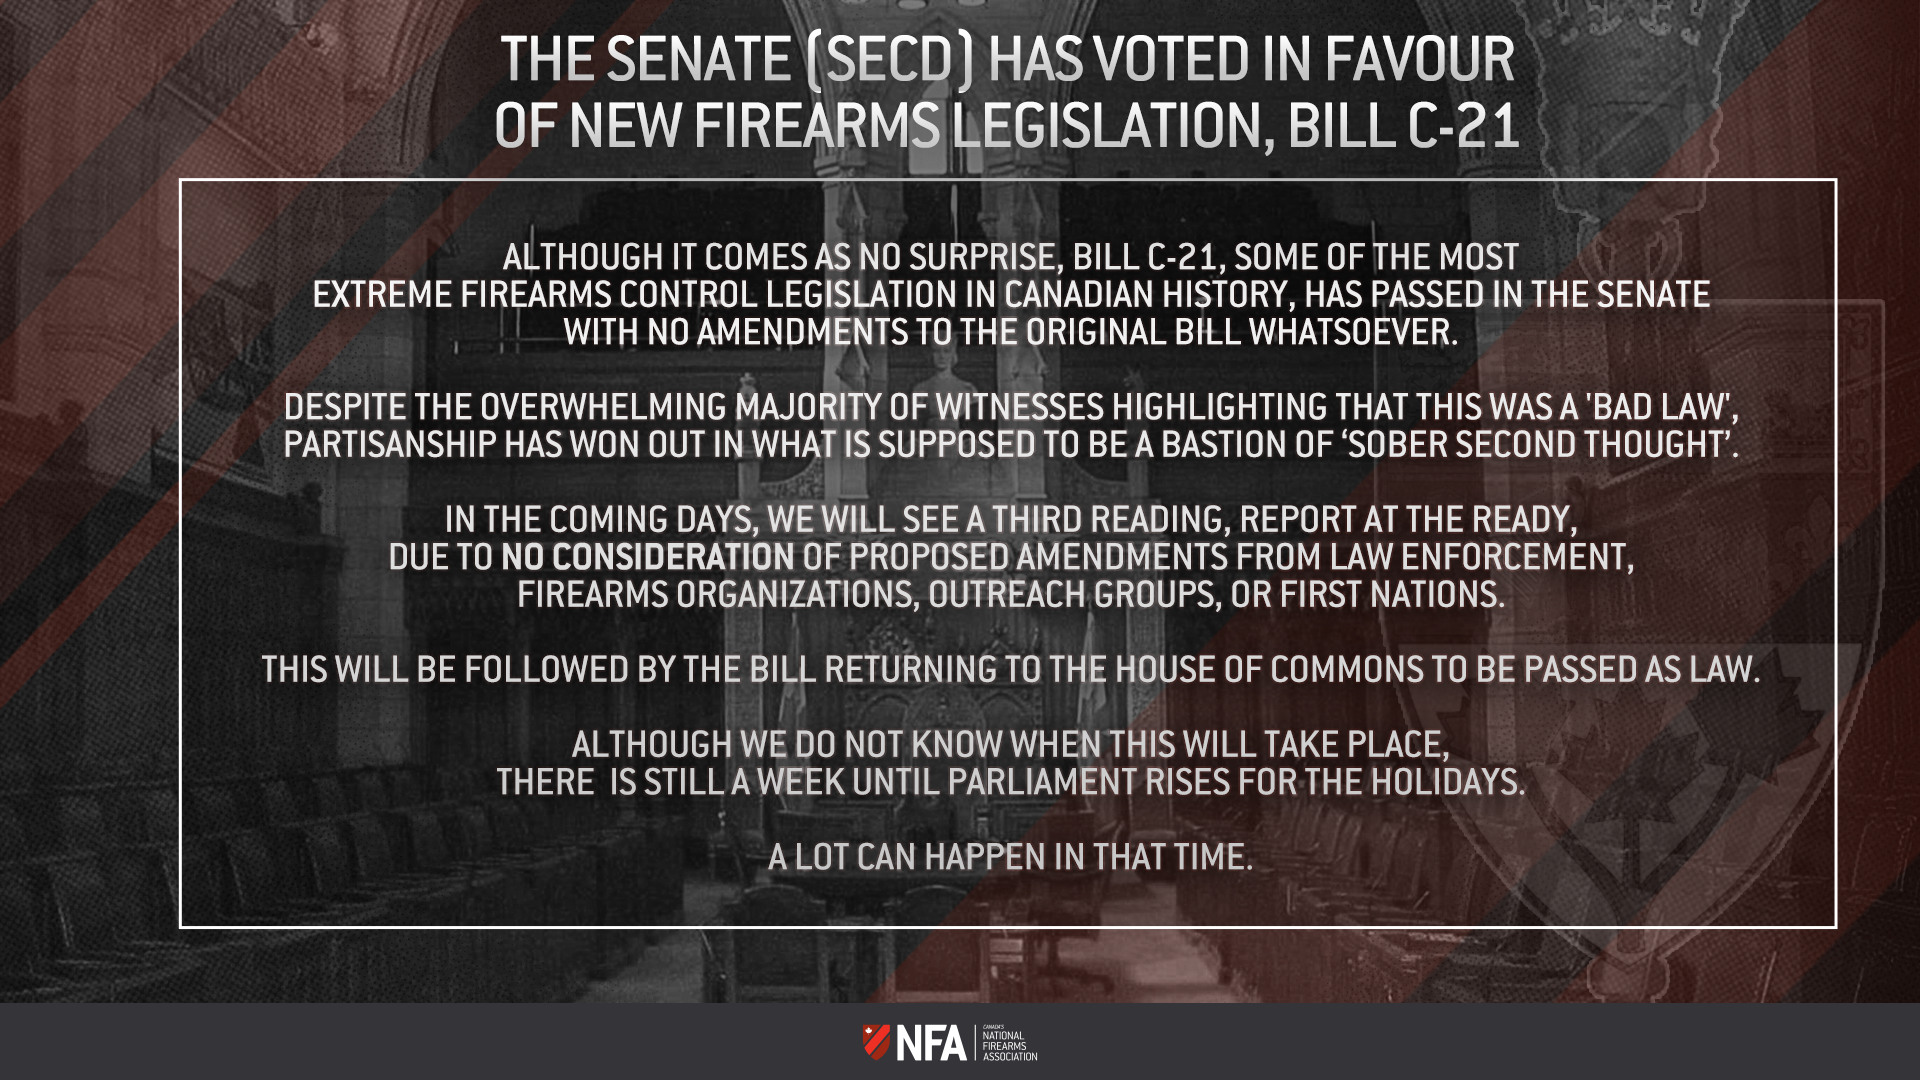 Bill C-21 Passes SECD Senate Vote